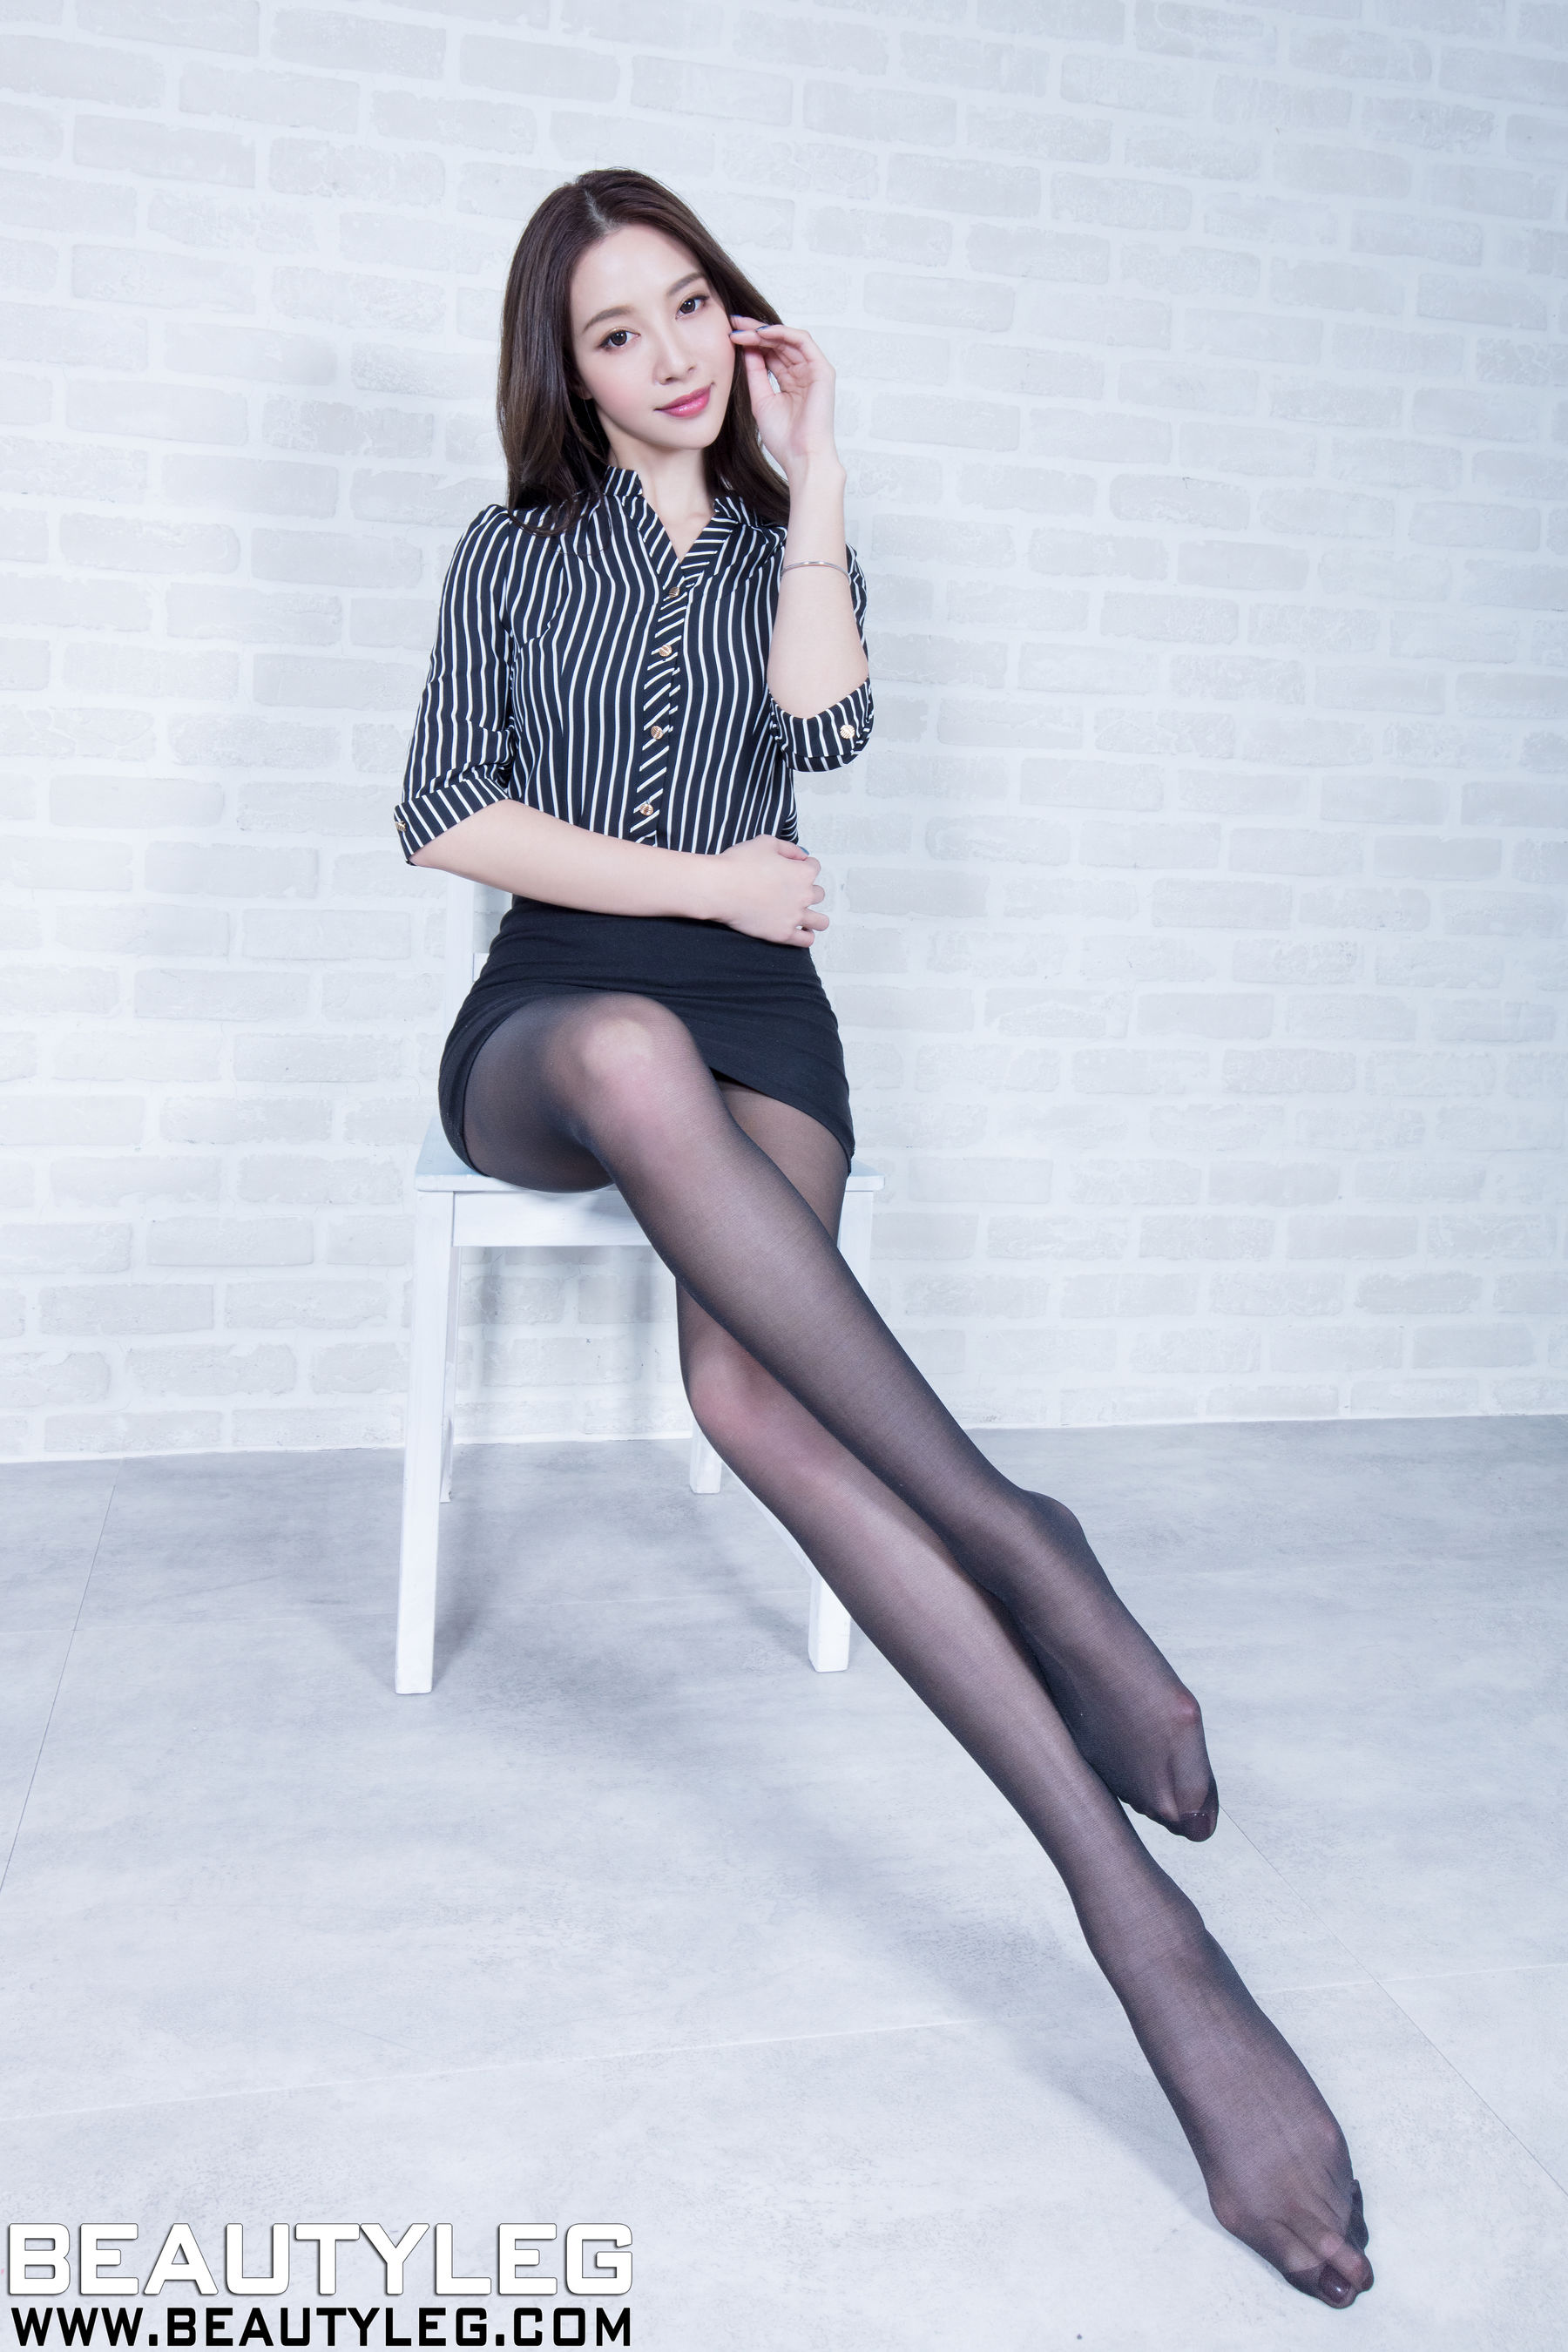 [Beautyleg] no.1506 leg model EMMA leg photo